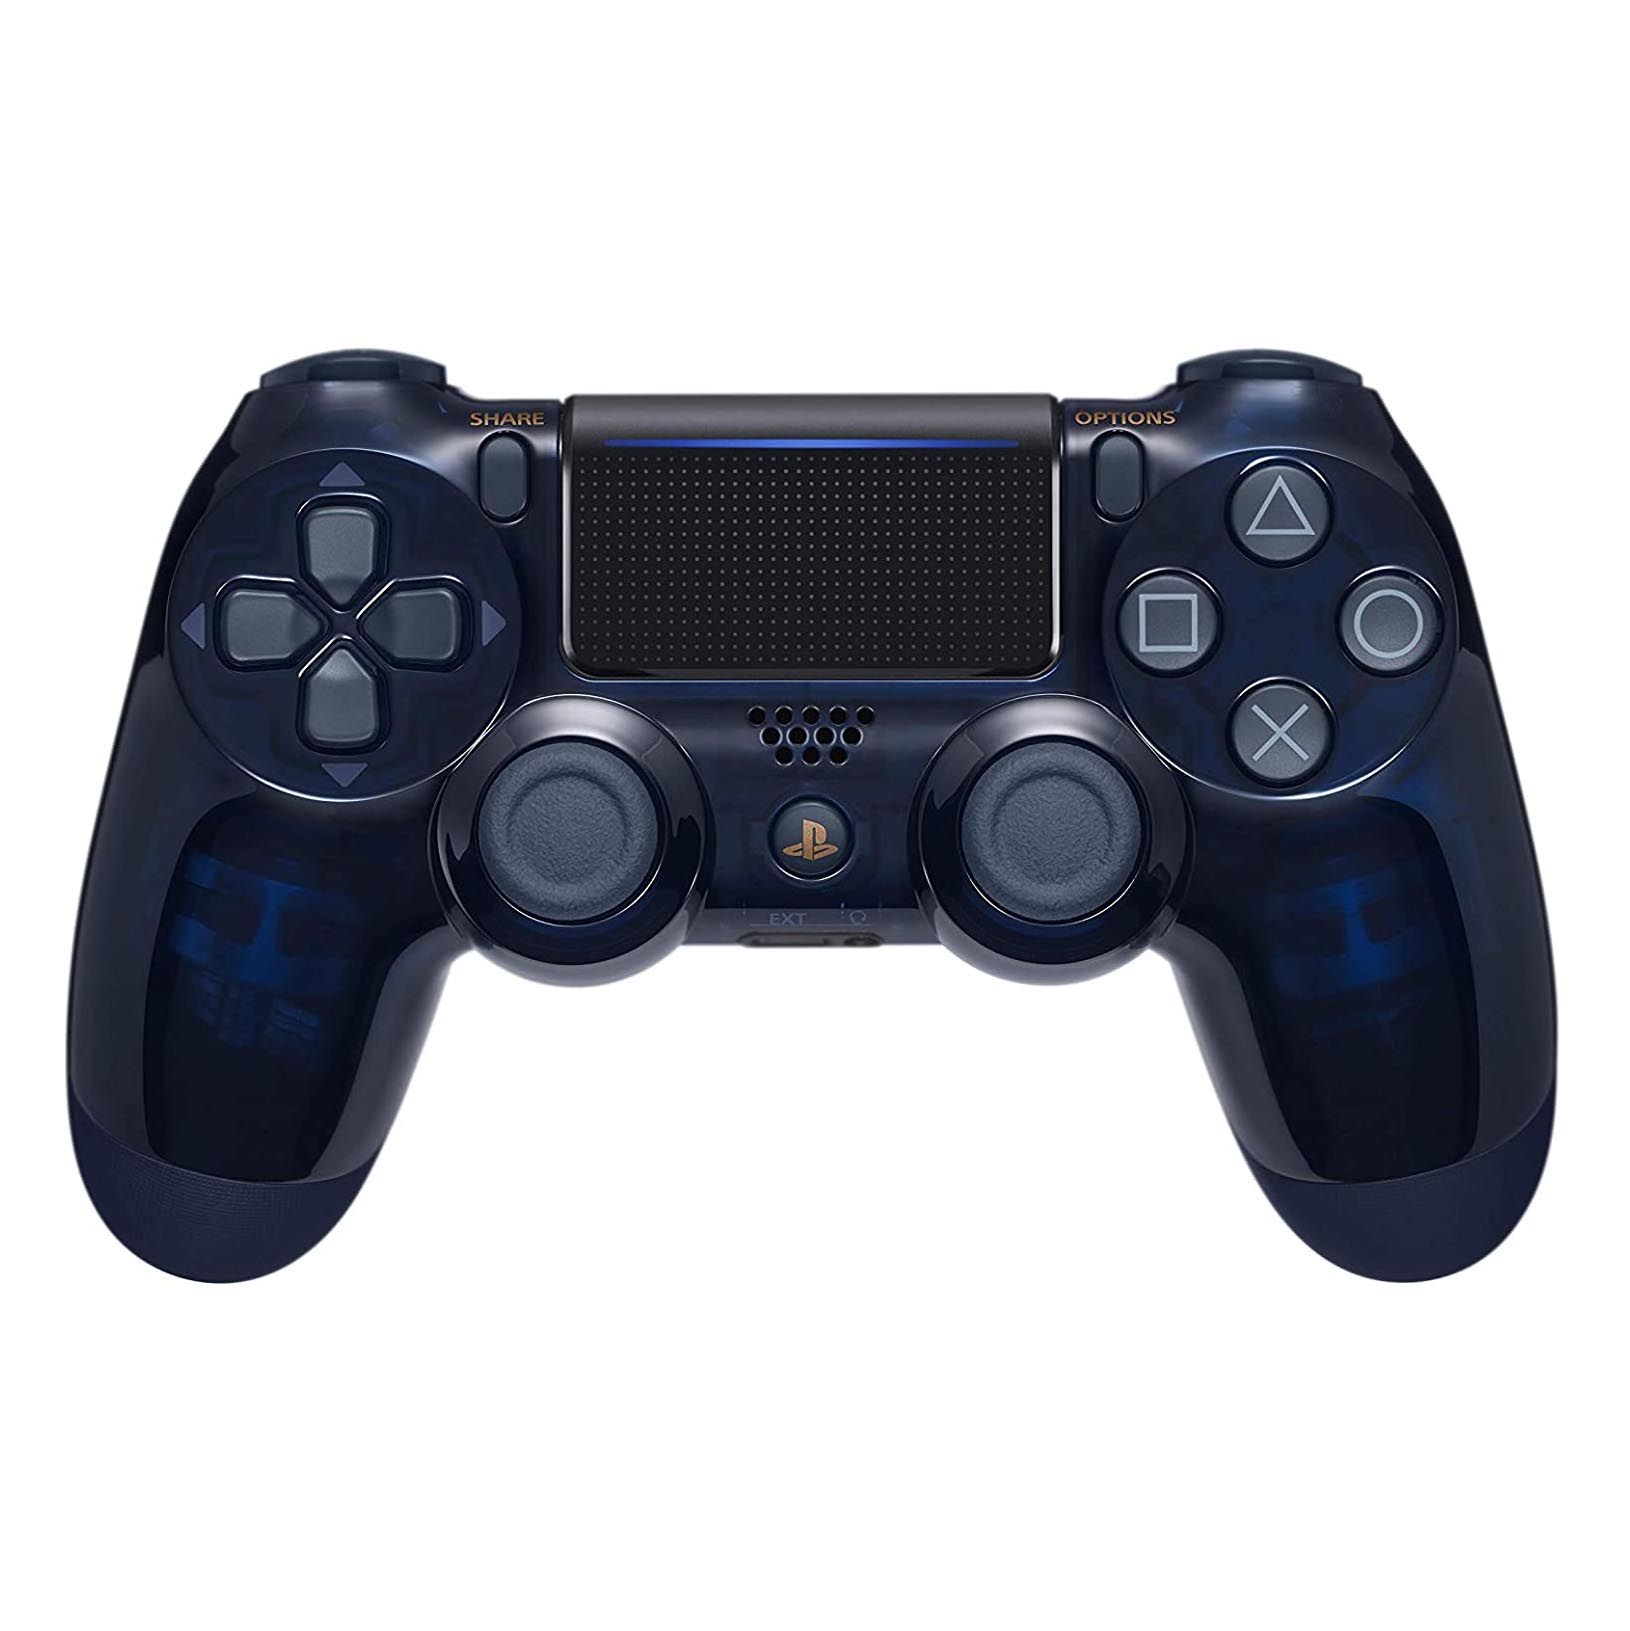 Беспроводной геймпад Sony DualShock 4 500 Million Limited Edition для PlayStation 4, темно-синий кастомизированный беспроводной геймпад dualshock 4 челси fc chelsea